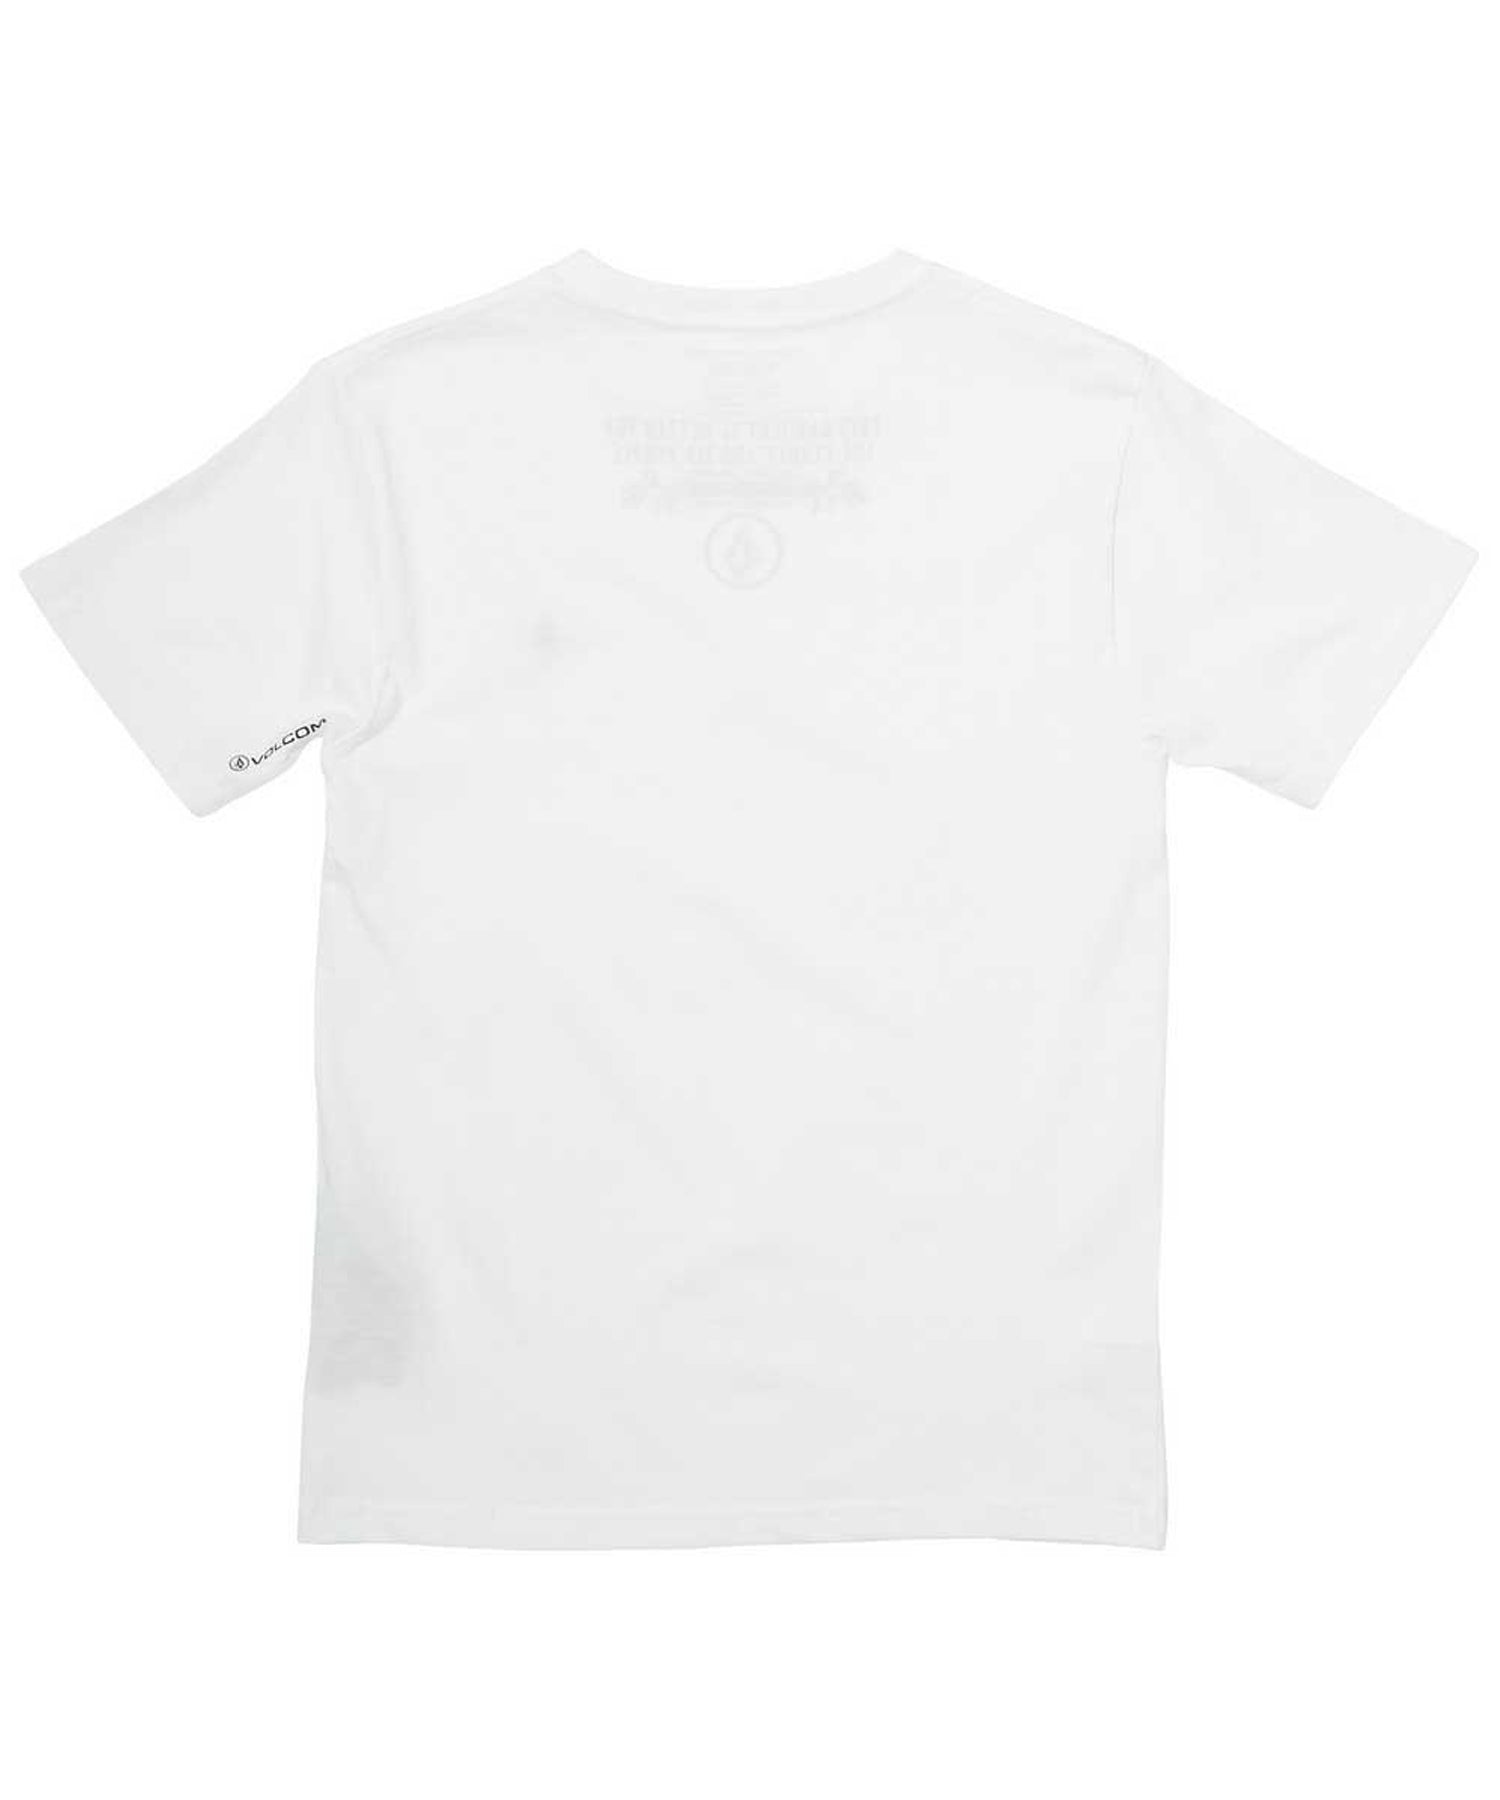 volcom-volcom-youth-camiseta-circle stone-white-camiseta para niño/a-color blanco-cuello redondo-algodón orgánico-serigrafia volcom en todo el pecho.